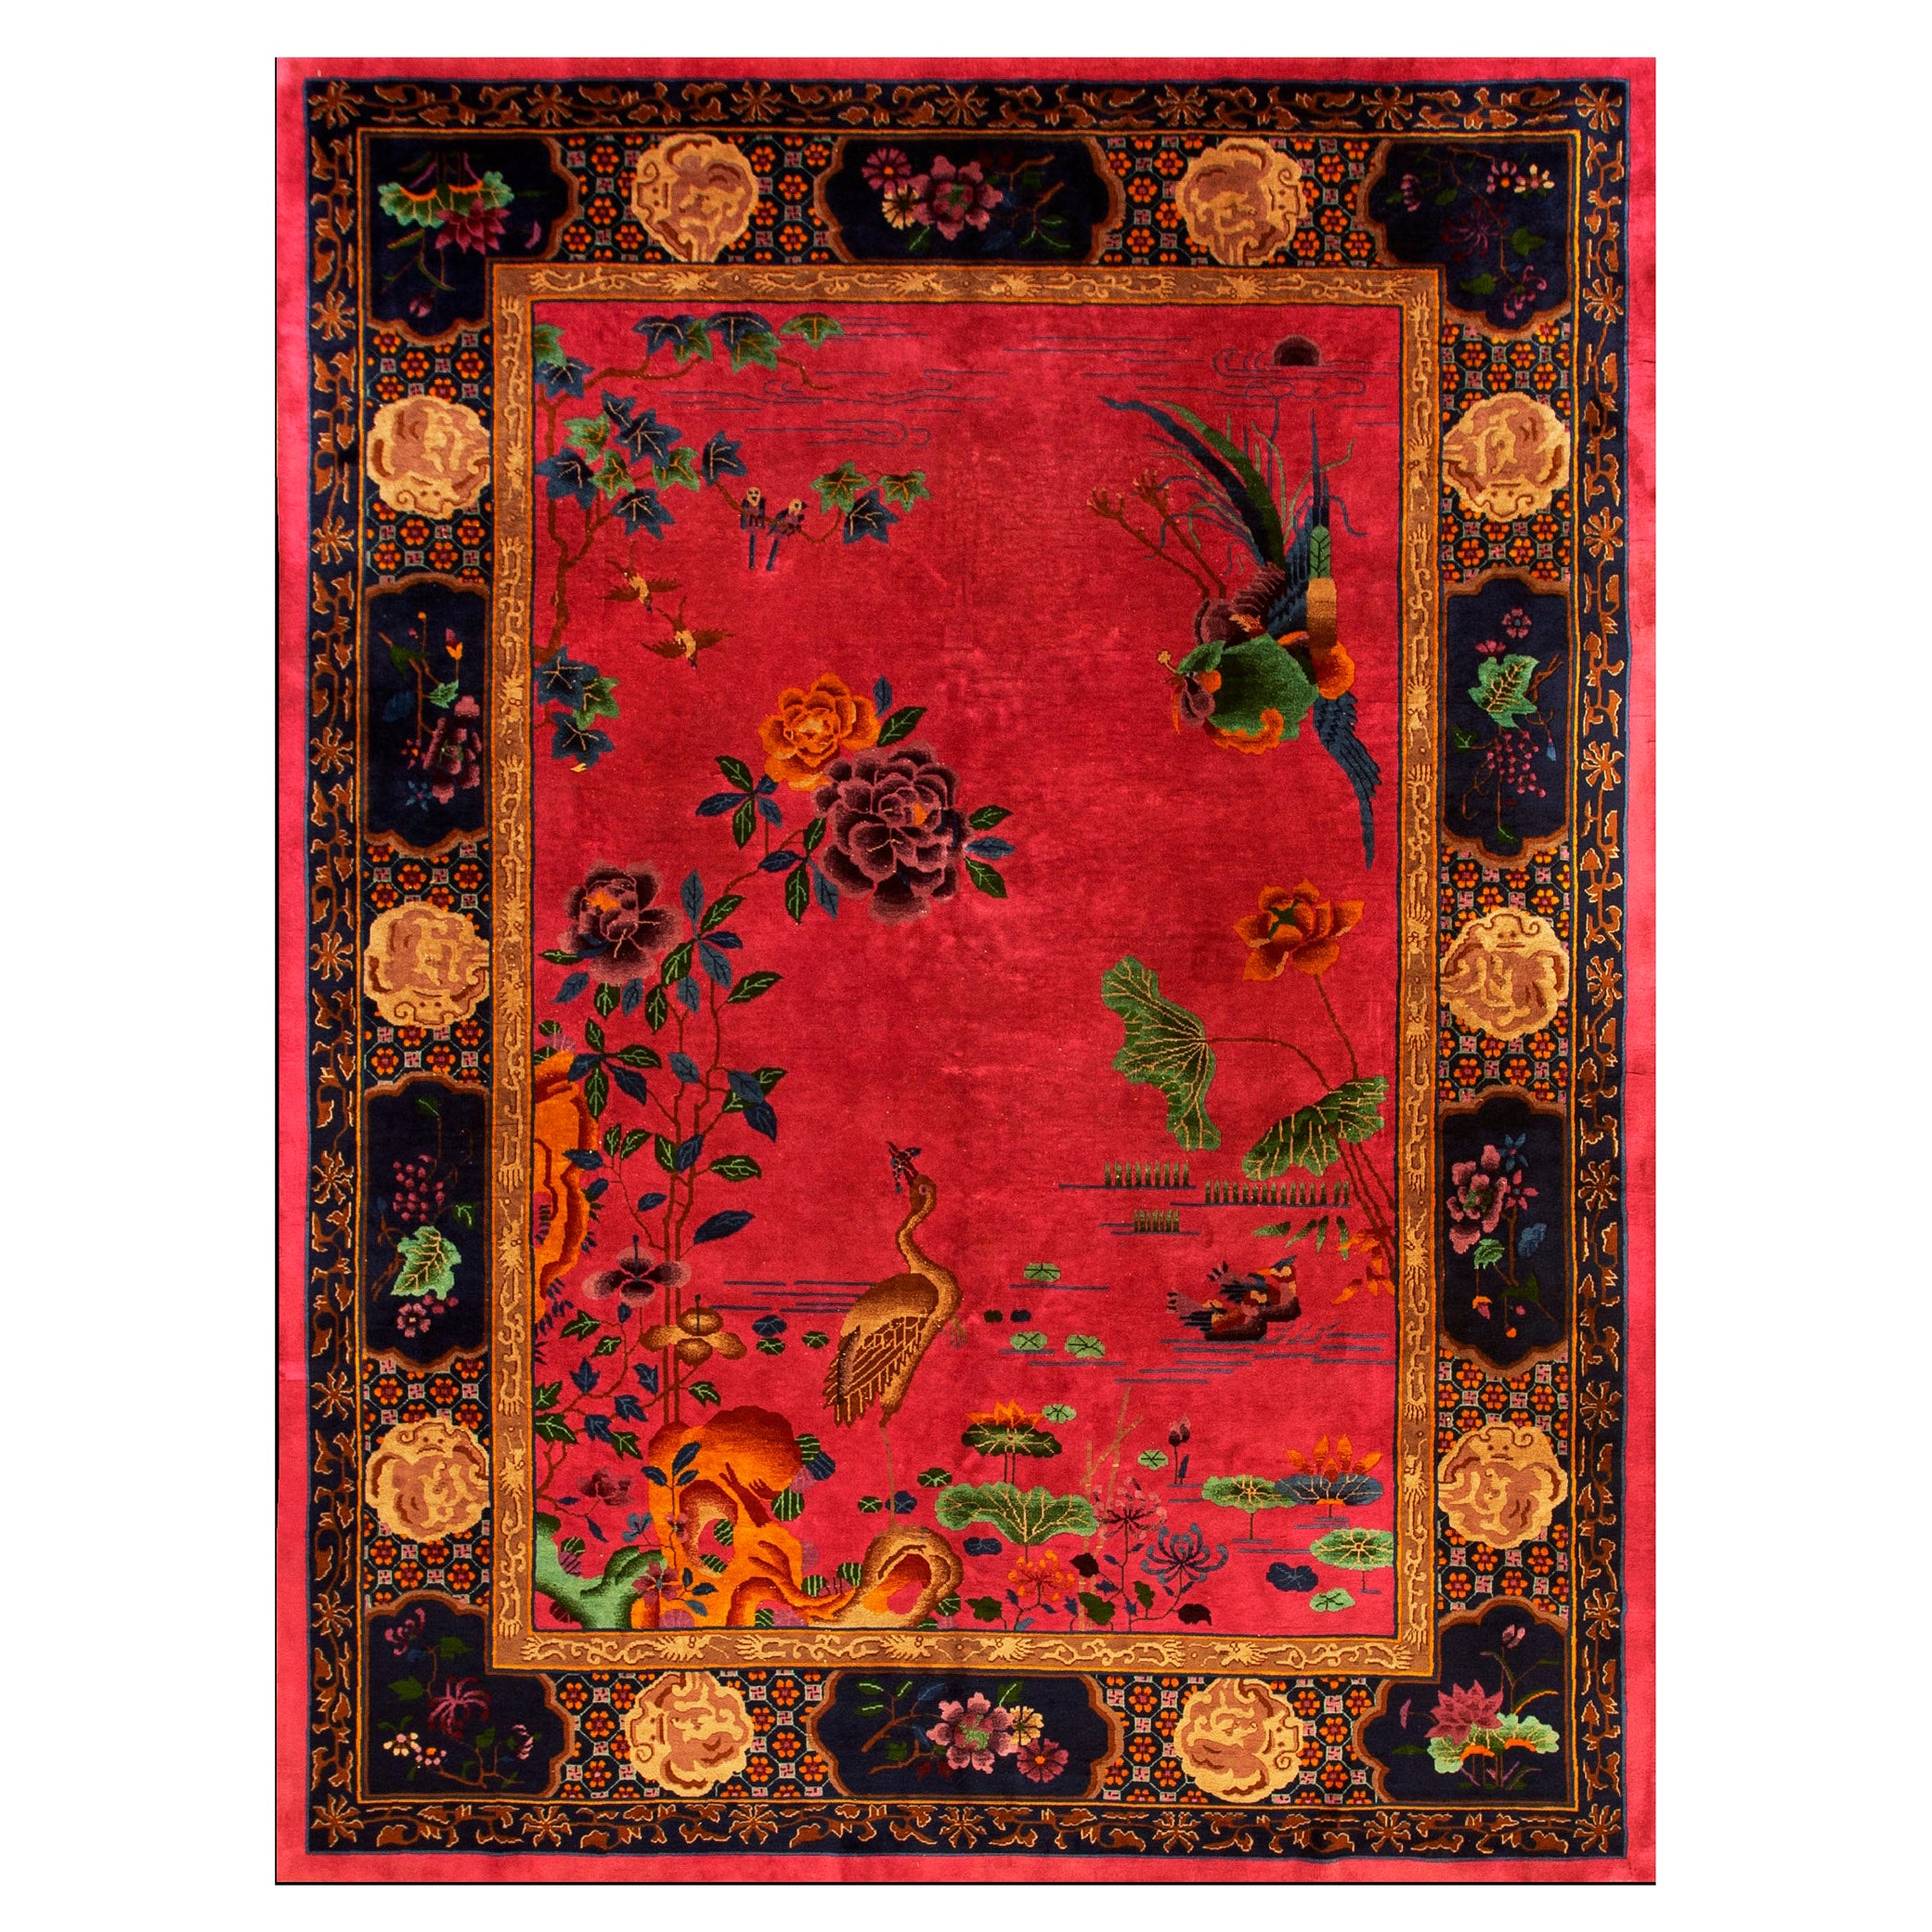 Chinesischer Art-Déco-Teppich aus den 1920er Jahren ( 8' 9 Zoll x 11' 8 Zoll) – 266 x 355 cm